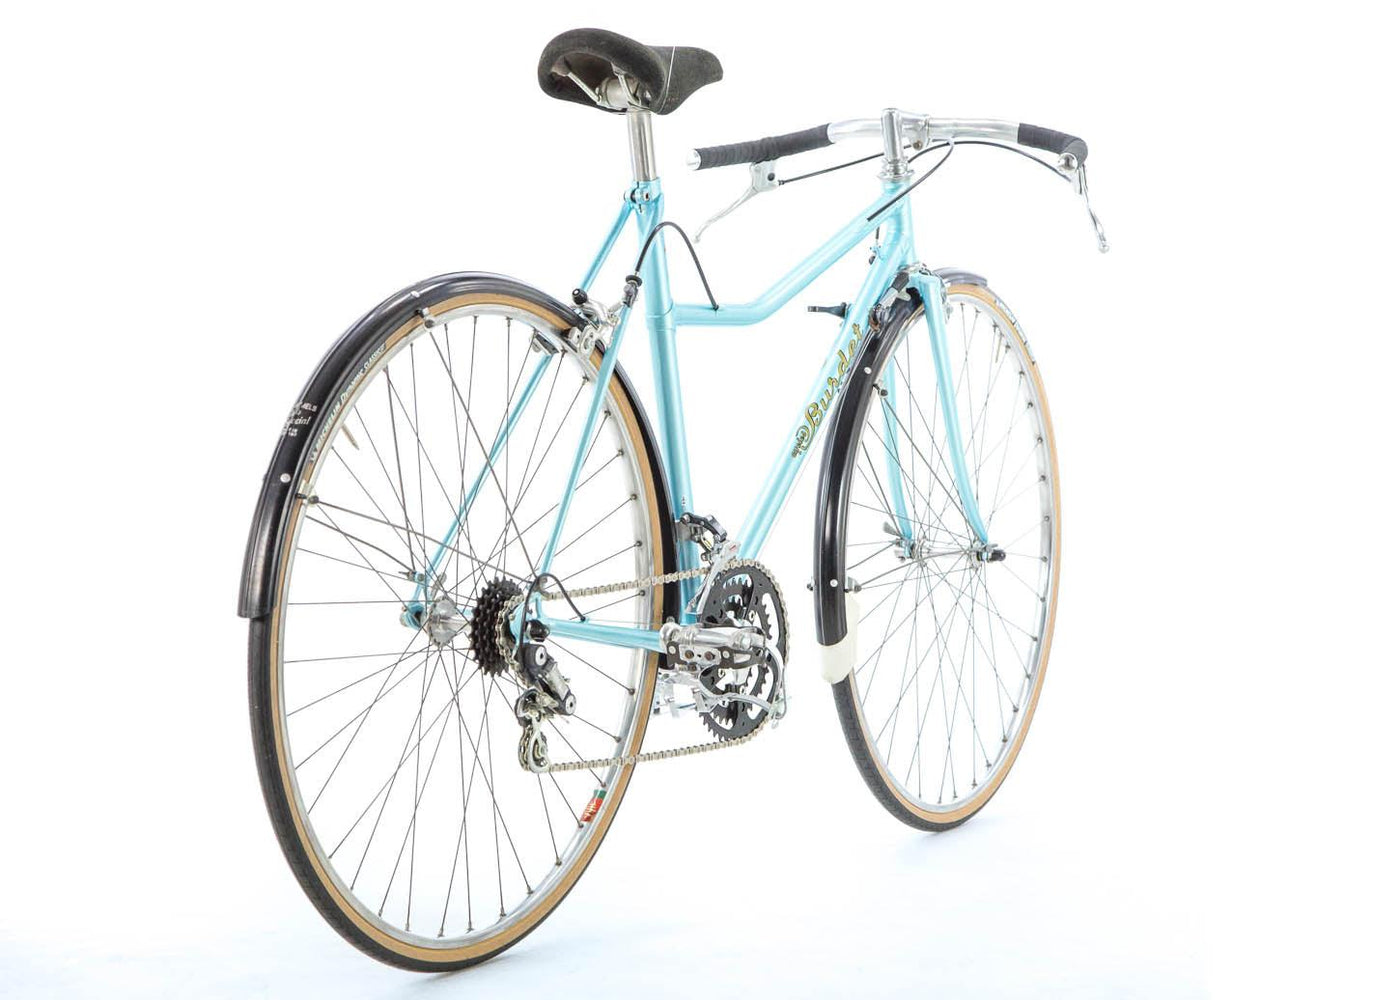 Burdet Anglais Ladies Road Bike 1980s - Steel Vintage Bikes